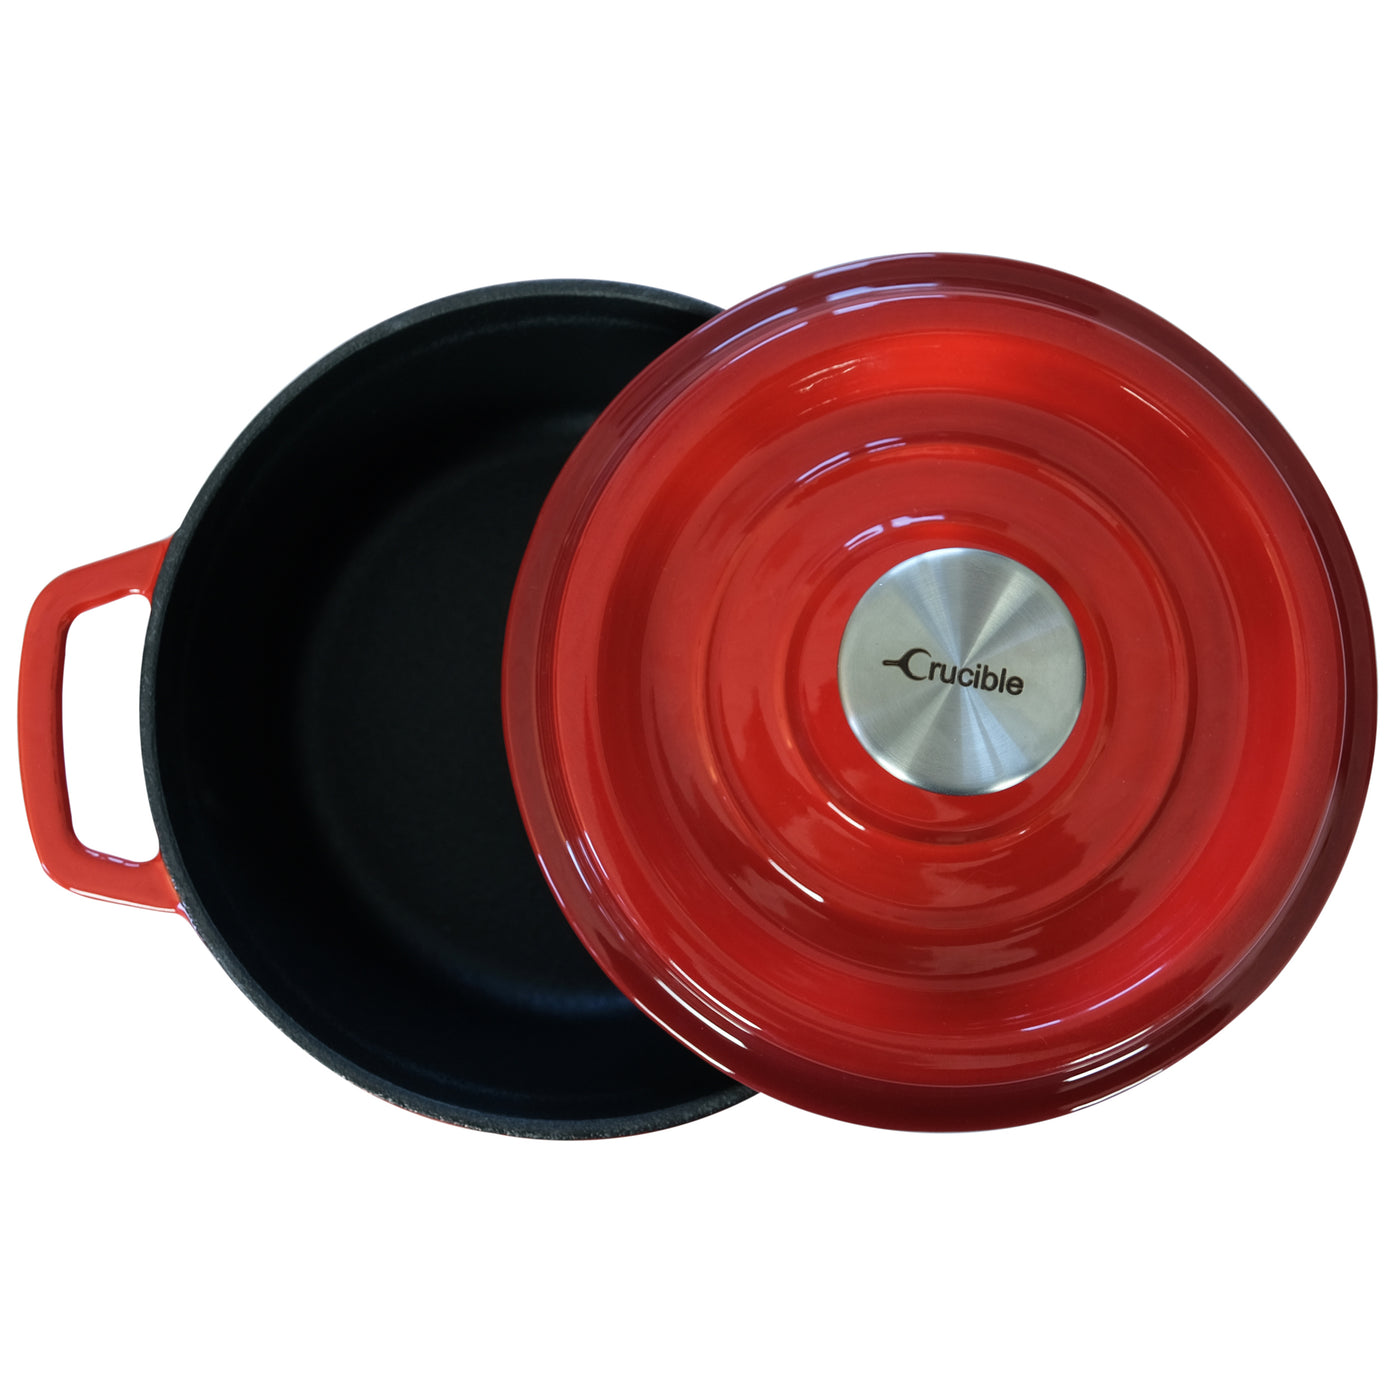 Enameled Cast Iron Dutch Oven Pot (7.87" / 20 cm diameter) Casserole Dish - Round Red